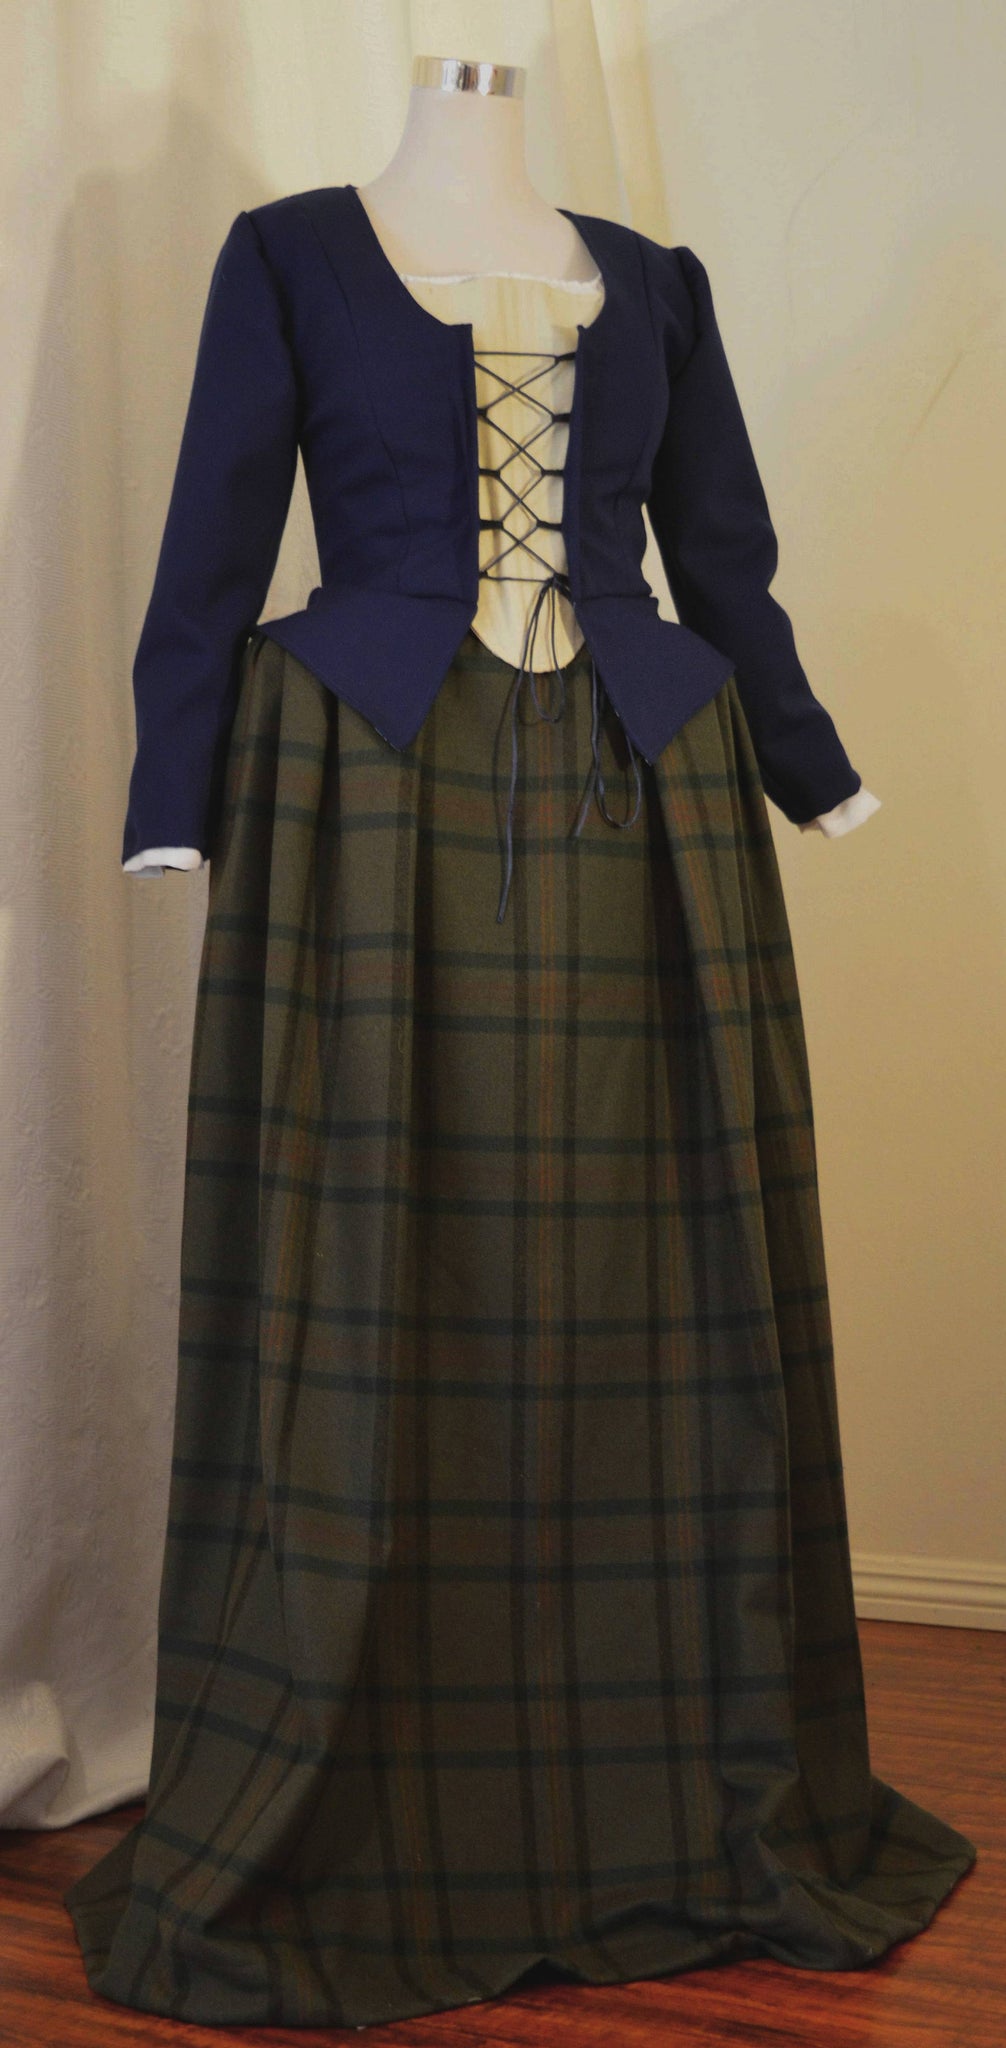 Outlander Fraiser Claire's inspiration costume